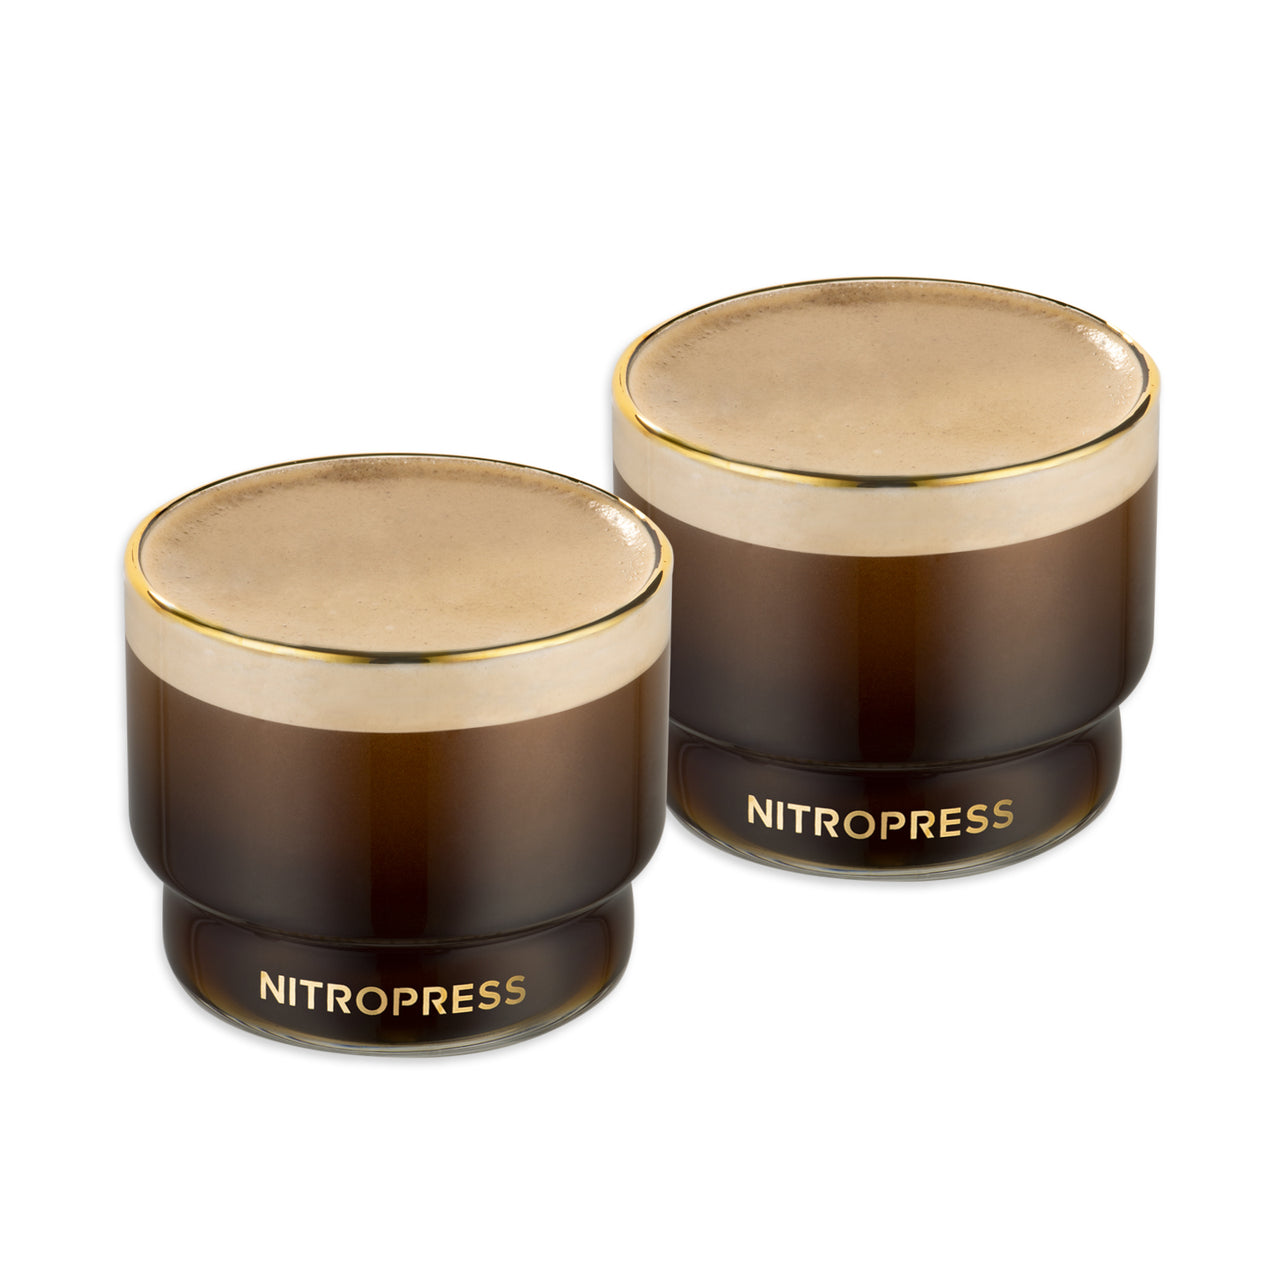 NitroPress tumblers to make nitro drinks